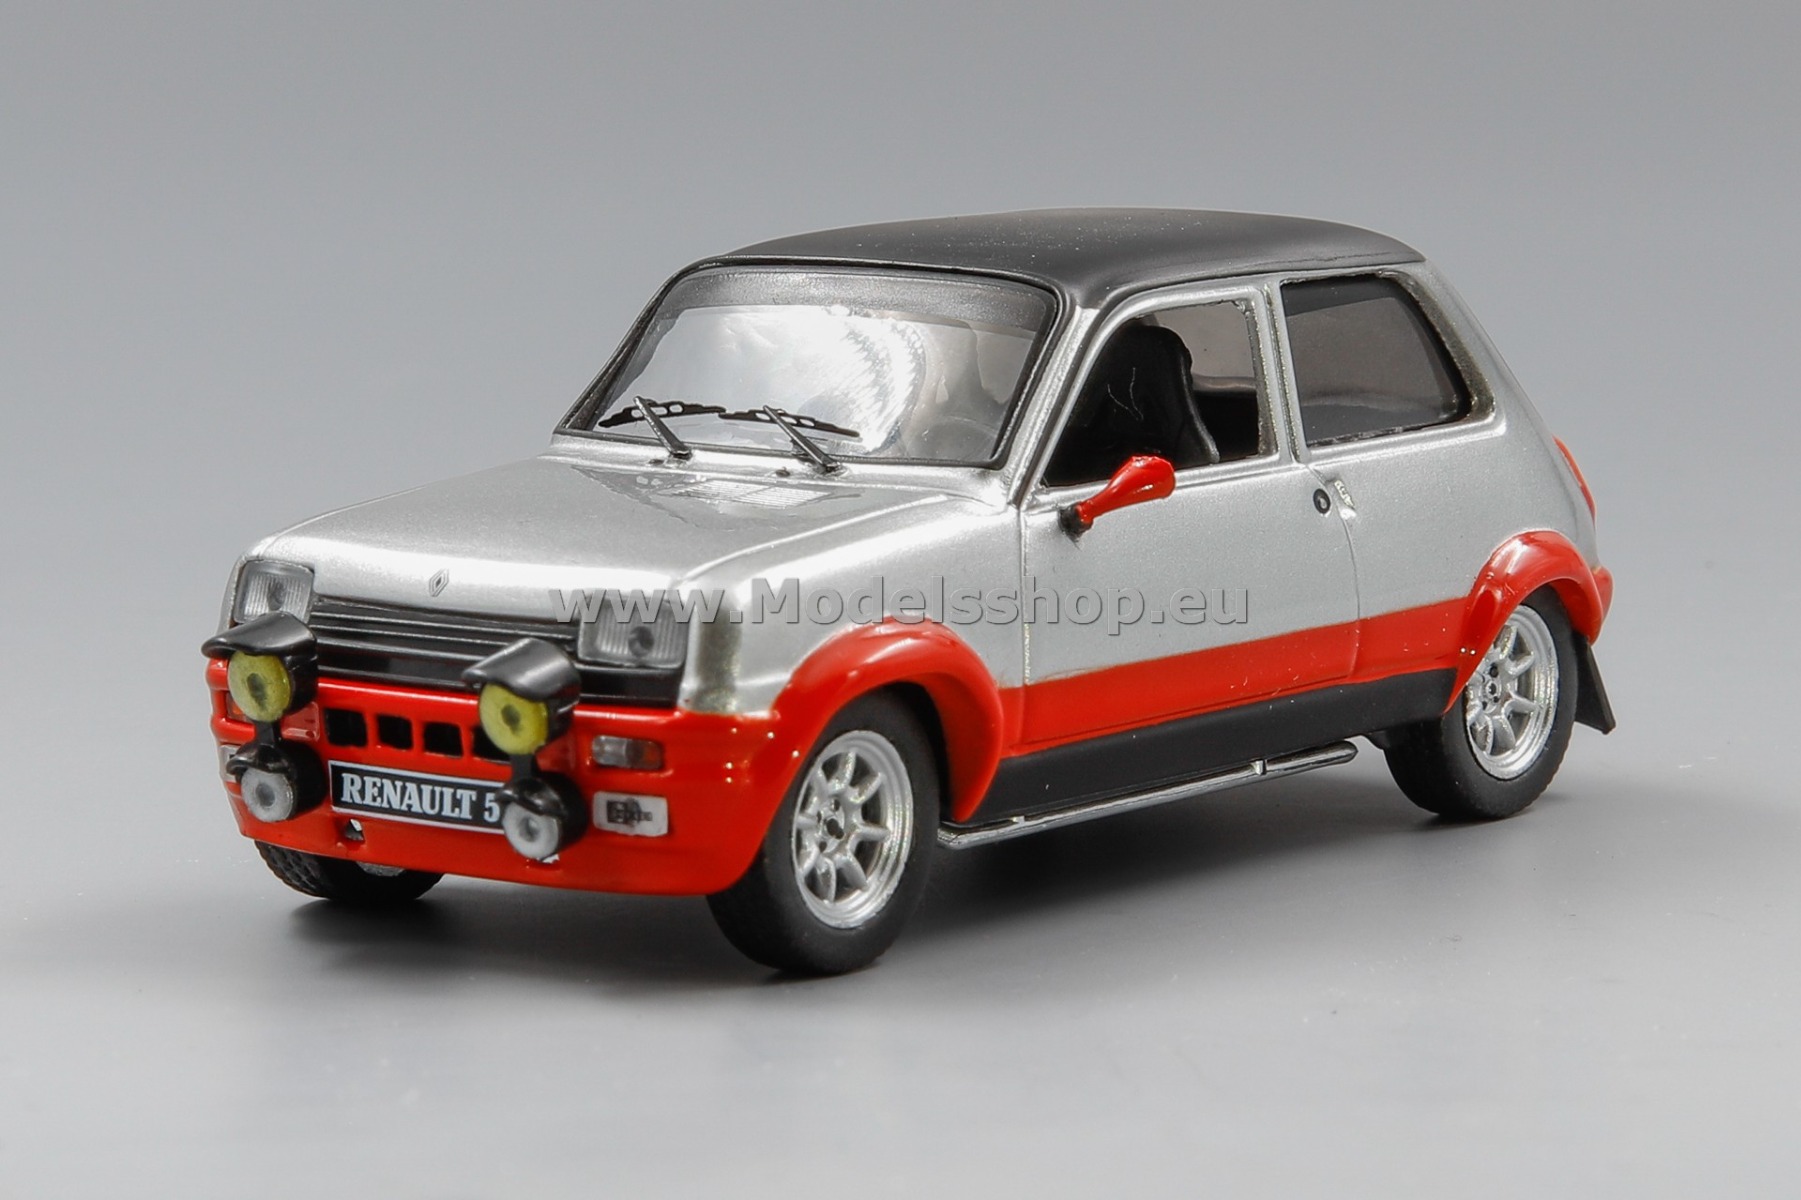 IXOCLC466N.22 Renault 5 Alpine customs, 1978 /silver - red/